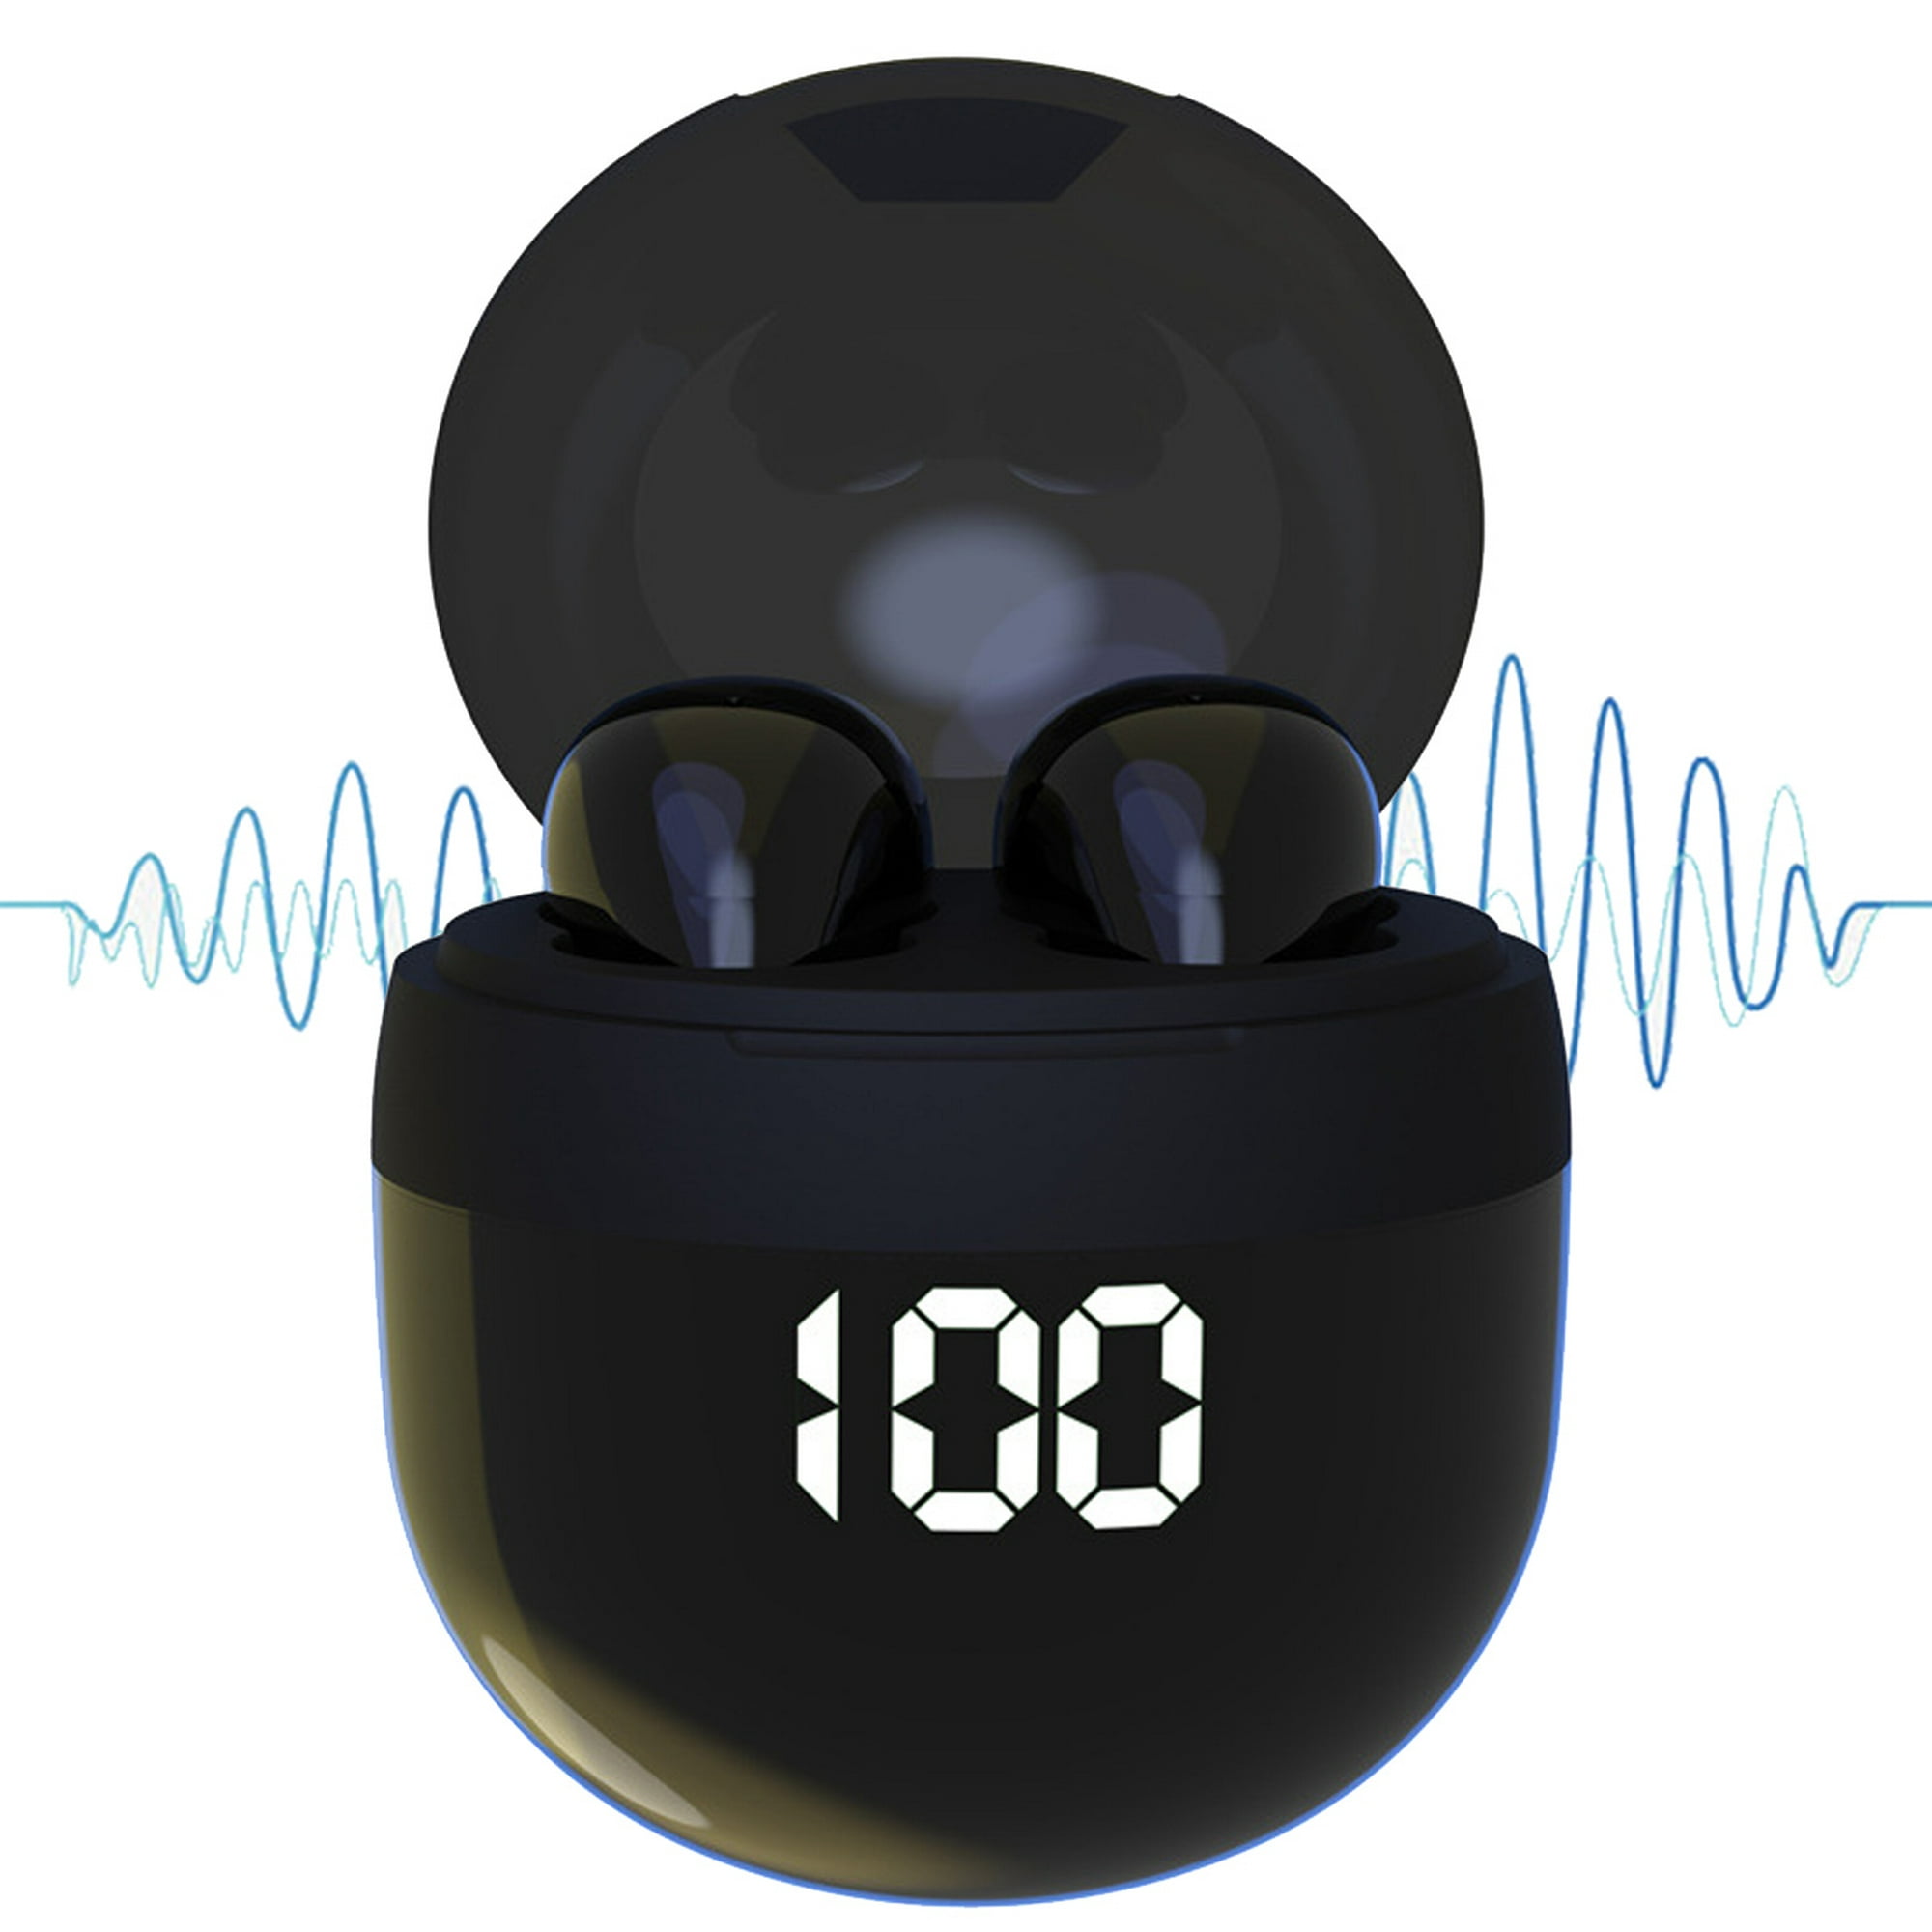  AQWEI Auricular inalámbrico para dormir invisible Ipx5  impermeable, auriculares invisibles inalámbricos Bluetooth, auriculares  inalámbricos para dormir, cancelación de ruido doble (blanco) : Celulares y  Accesorios